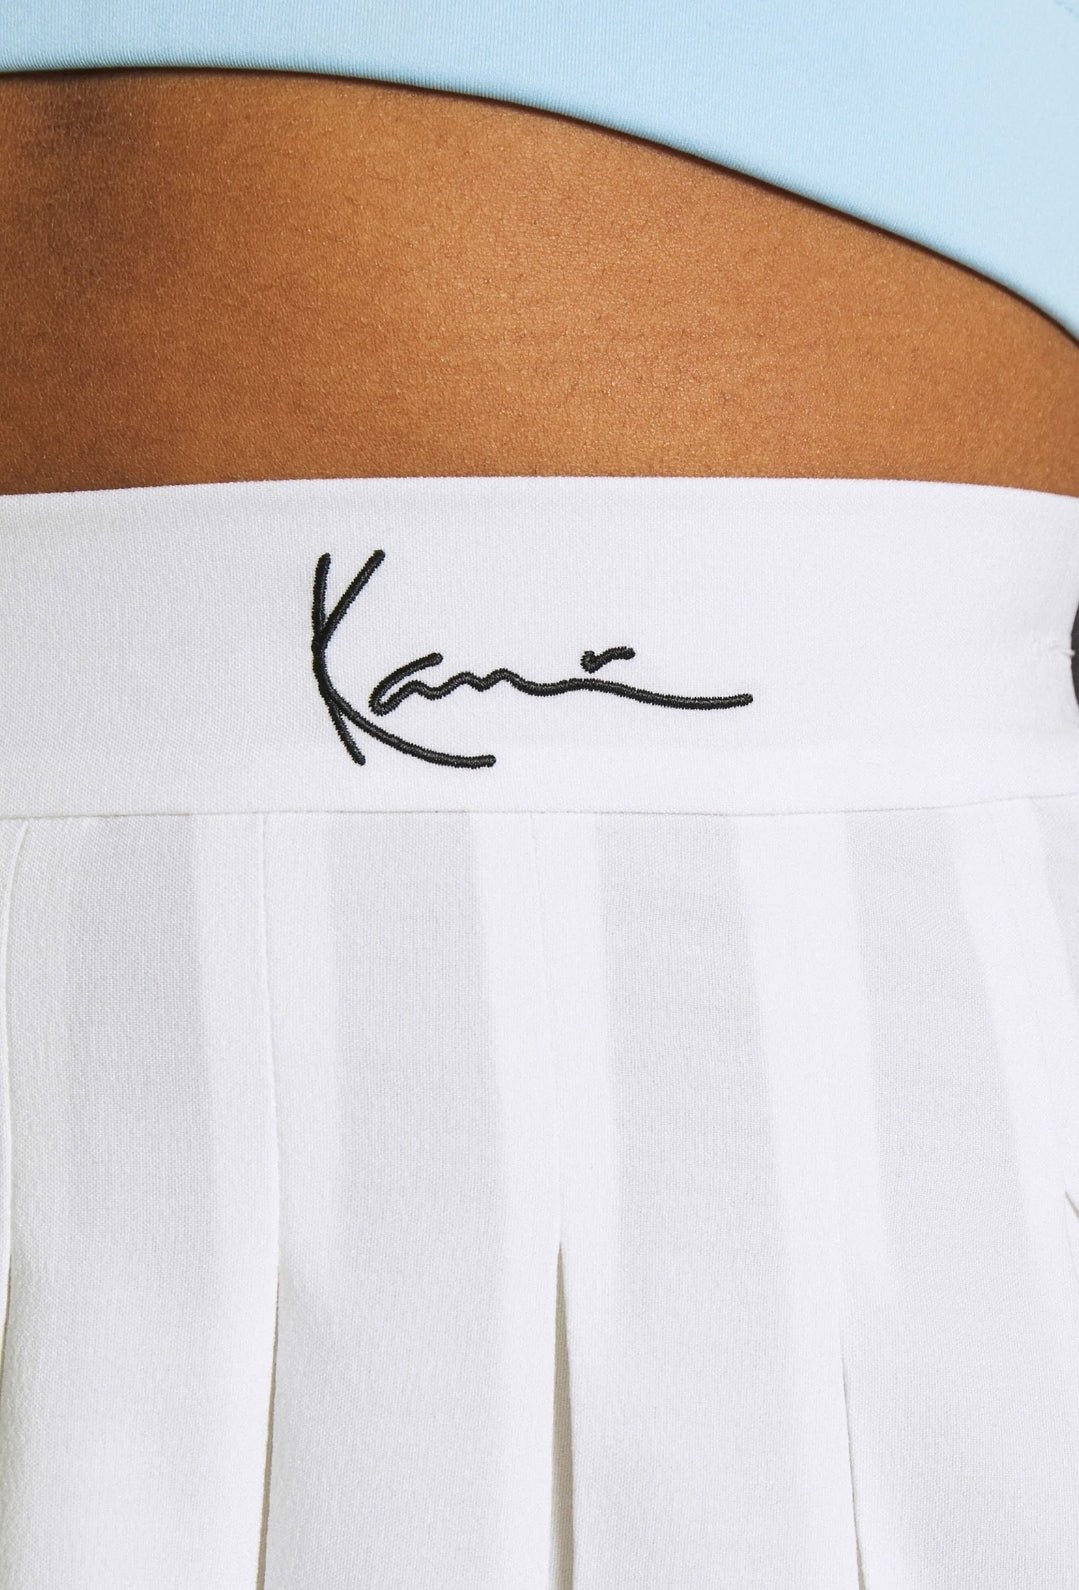 Karl Kani Small Signature Tennis Skirt (W)